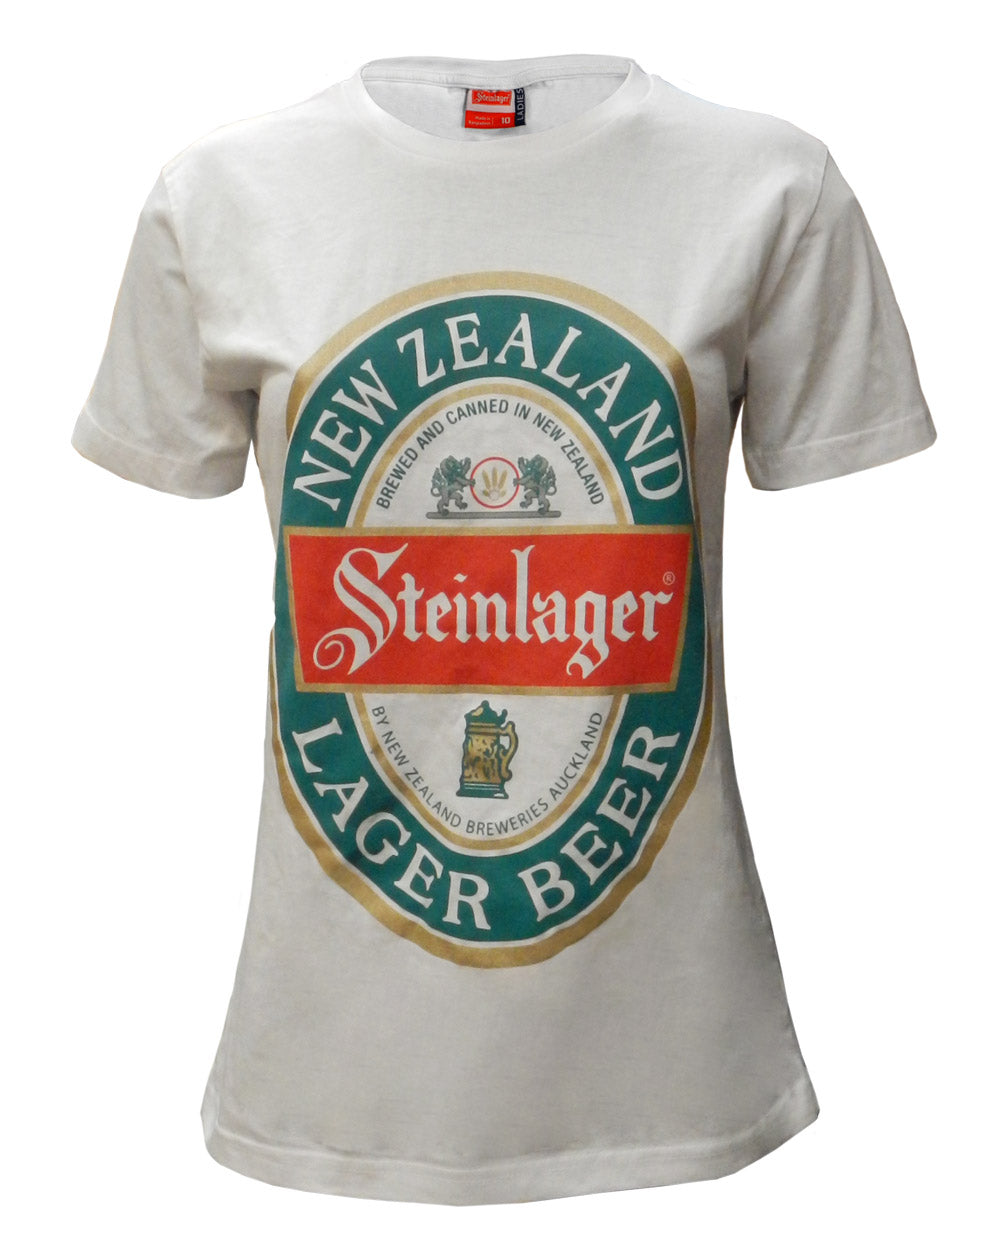 Steinlager WE BELIEVE Tee - Womens -  Beer Gear Apparel & Merchandise - Speights - Lion Red - VB - Tokyo Dy merch